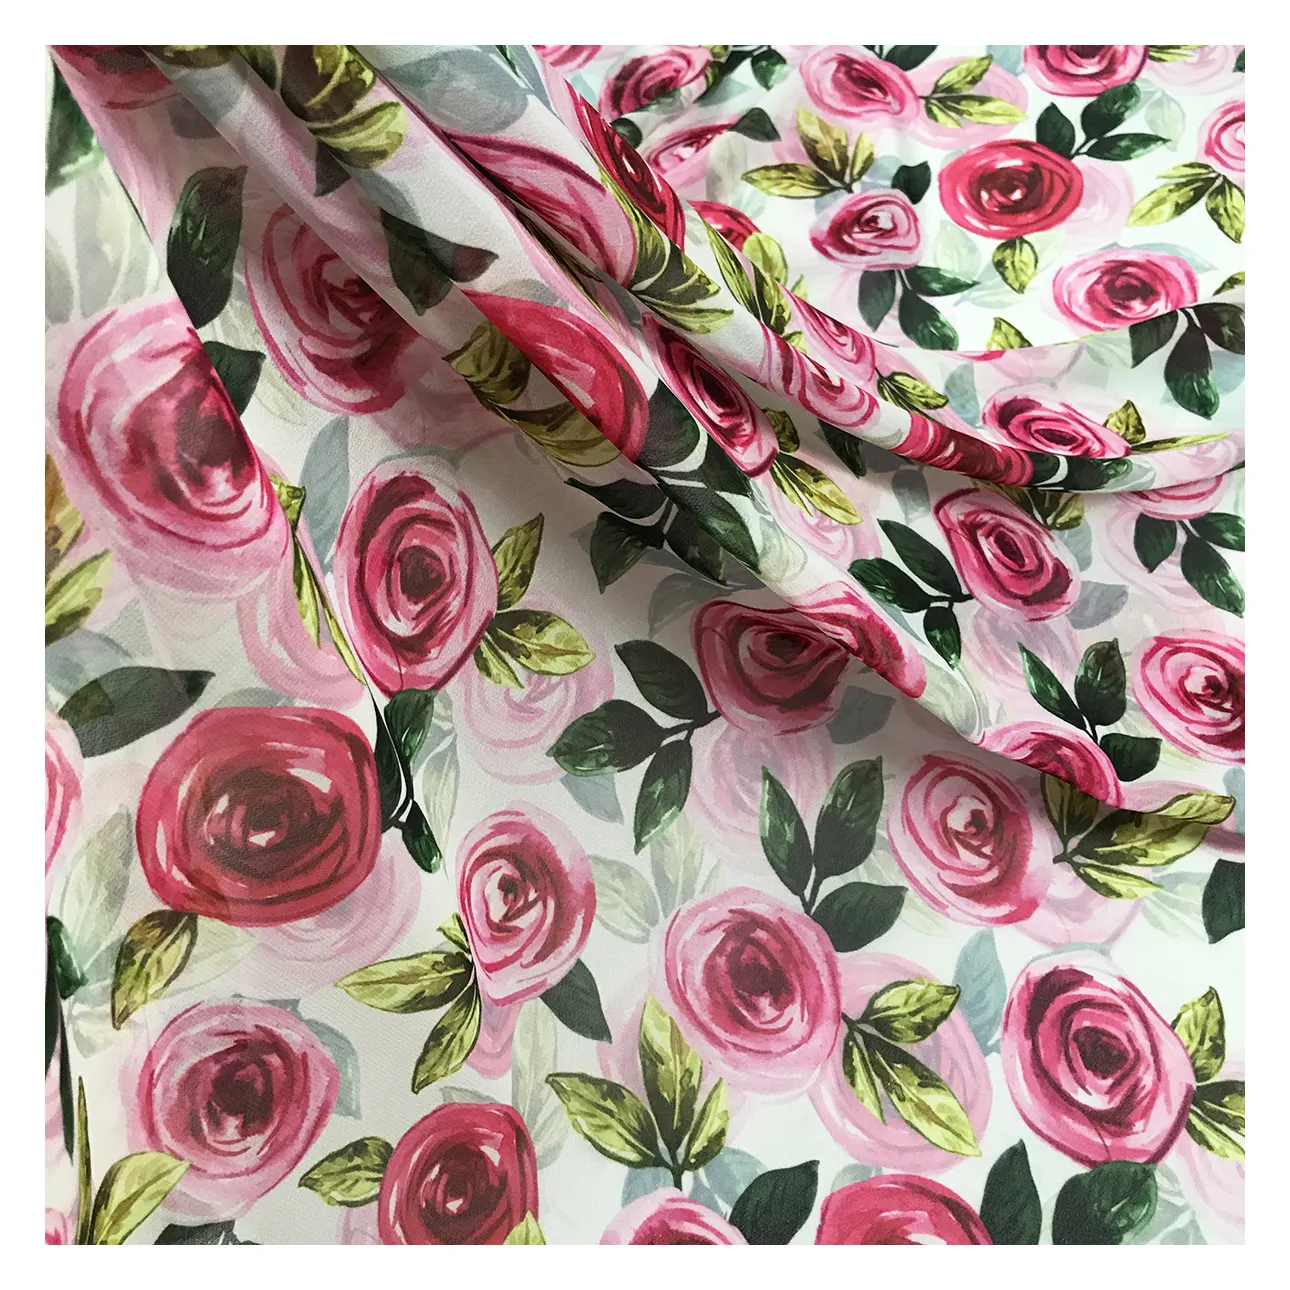 New fashion vibrant flower pattern Custom Digital polyester printed floral chiffon fabric for dresses